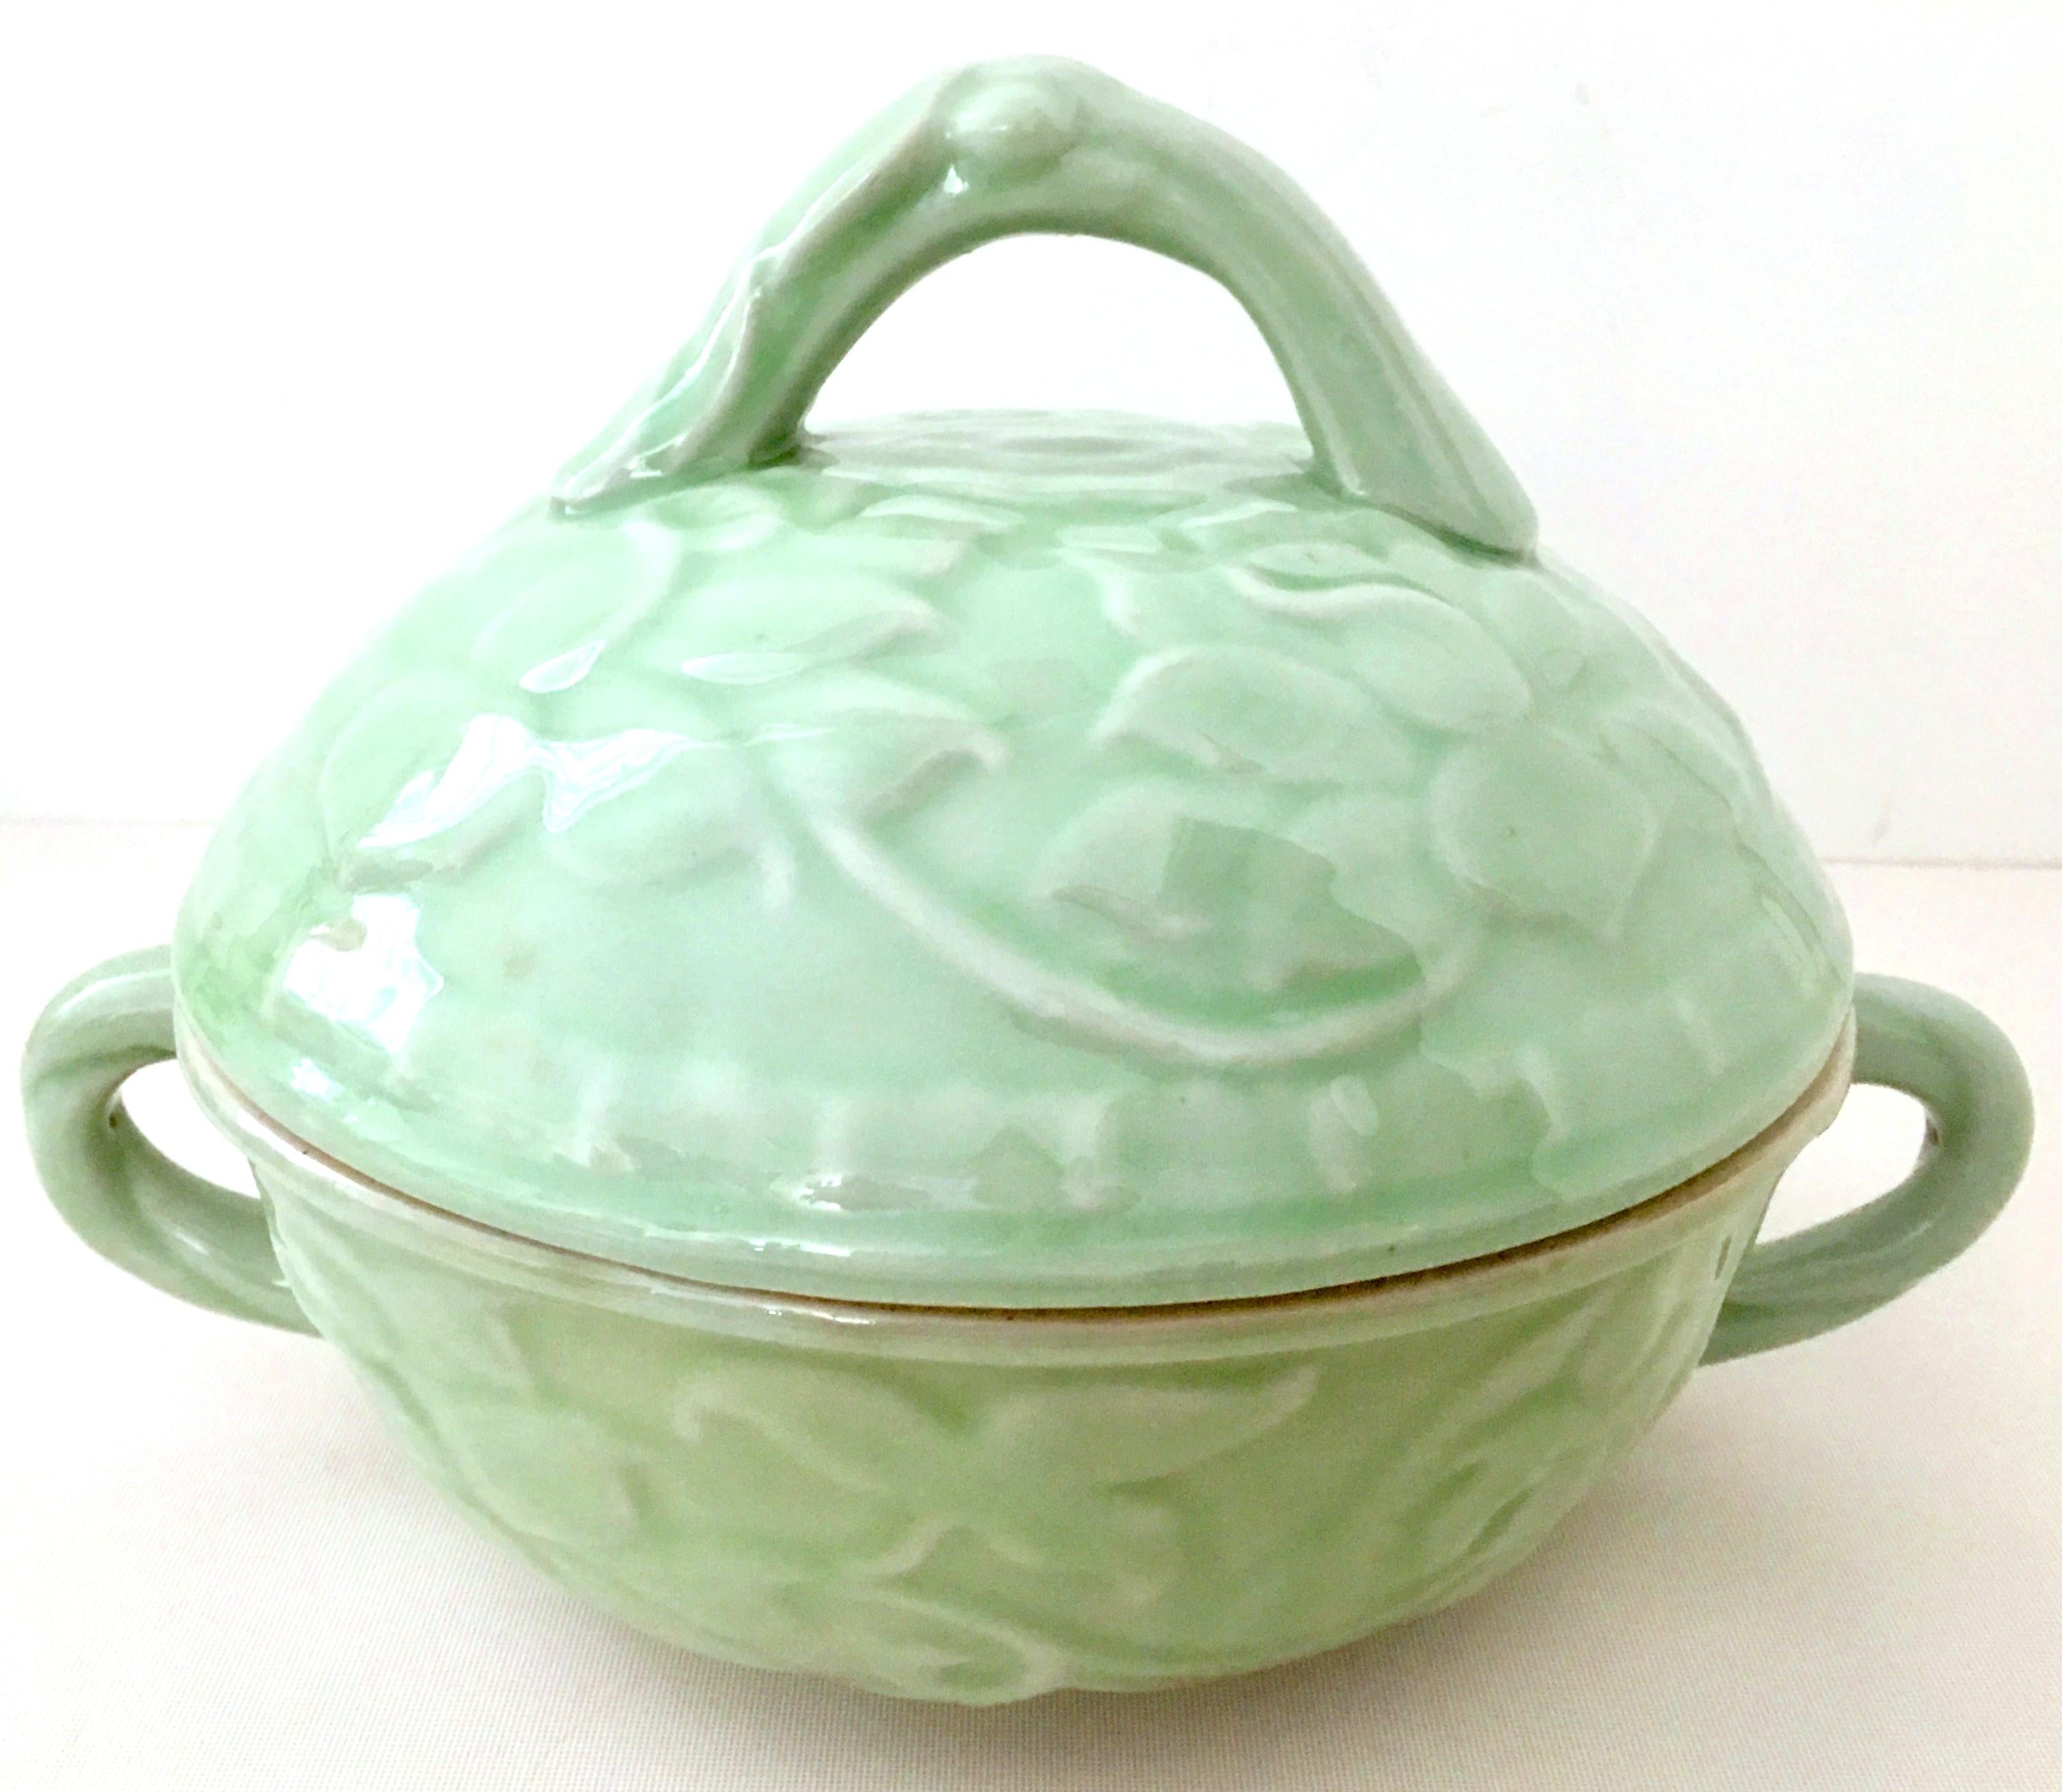 20th century Ceramic Lidded Tureen. This sea foam green heavy duty Tureen has a high relief 